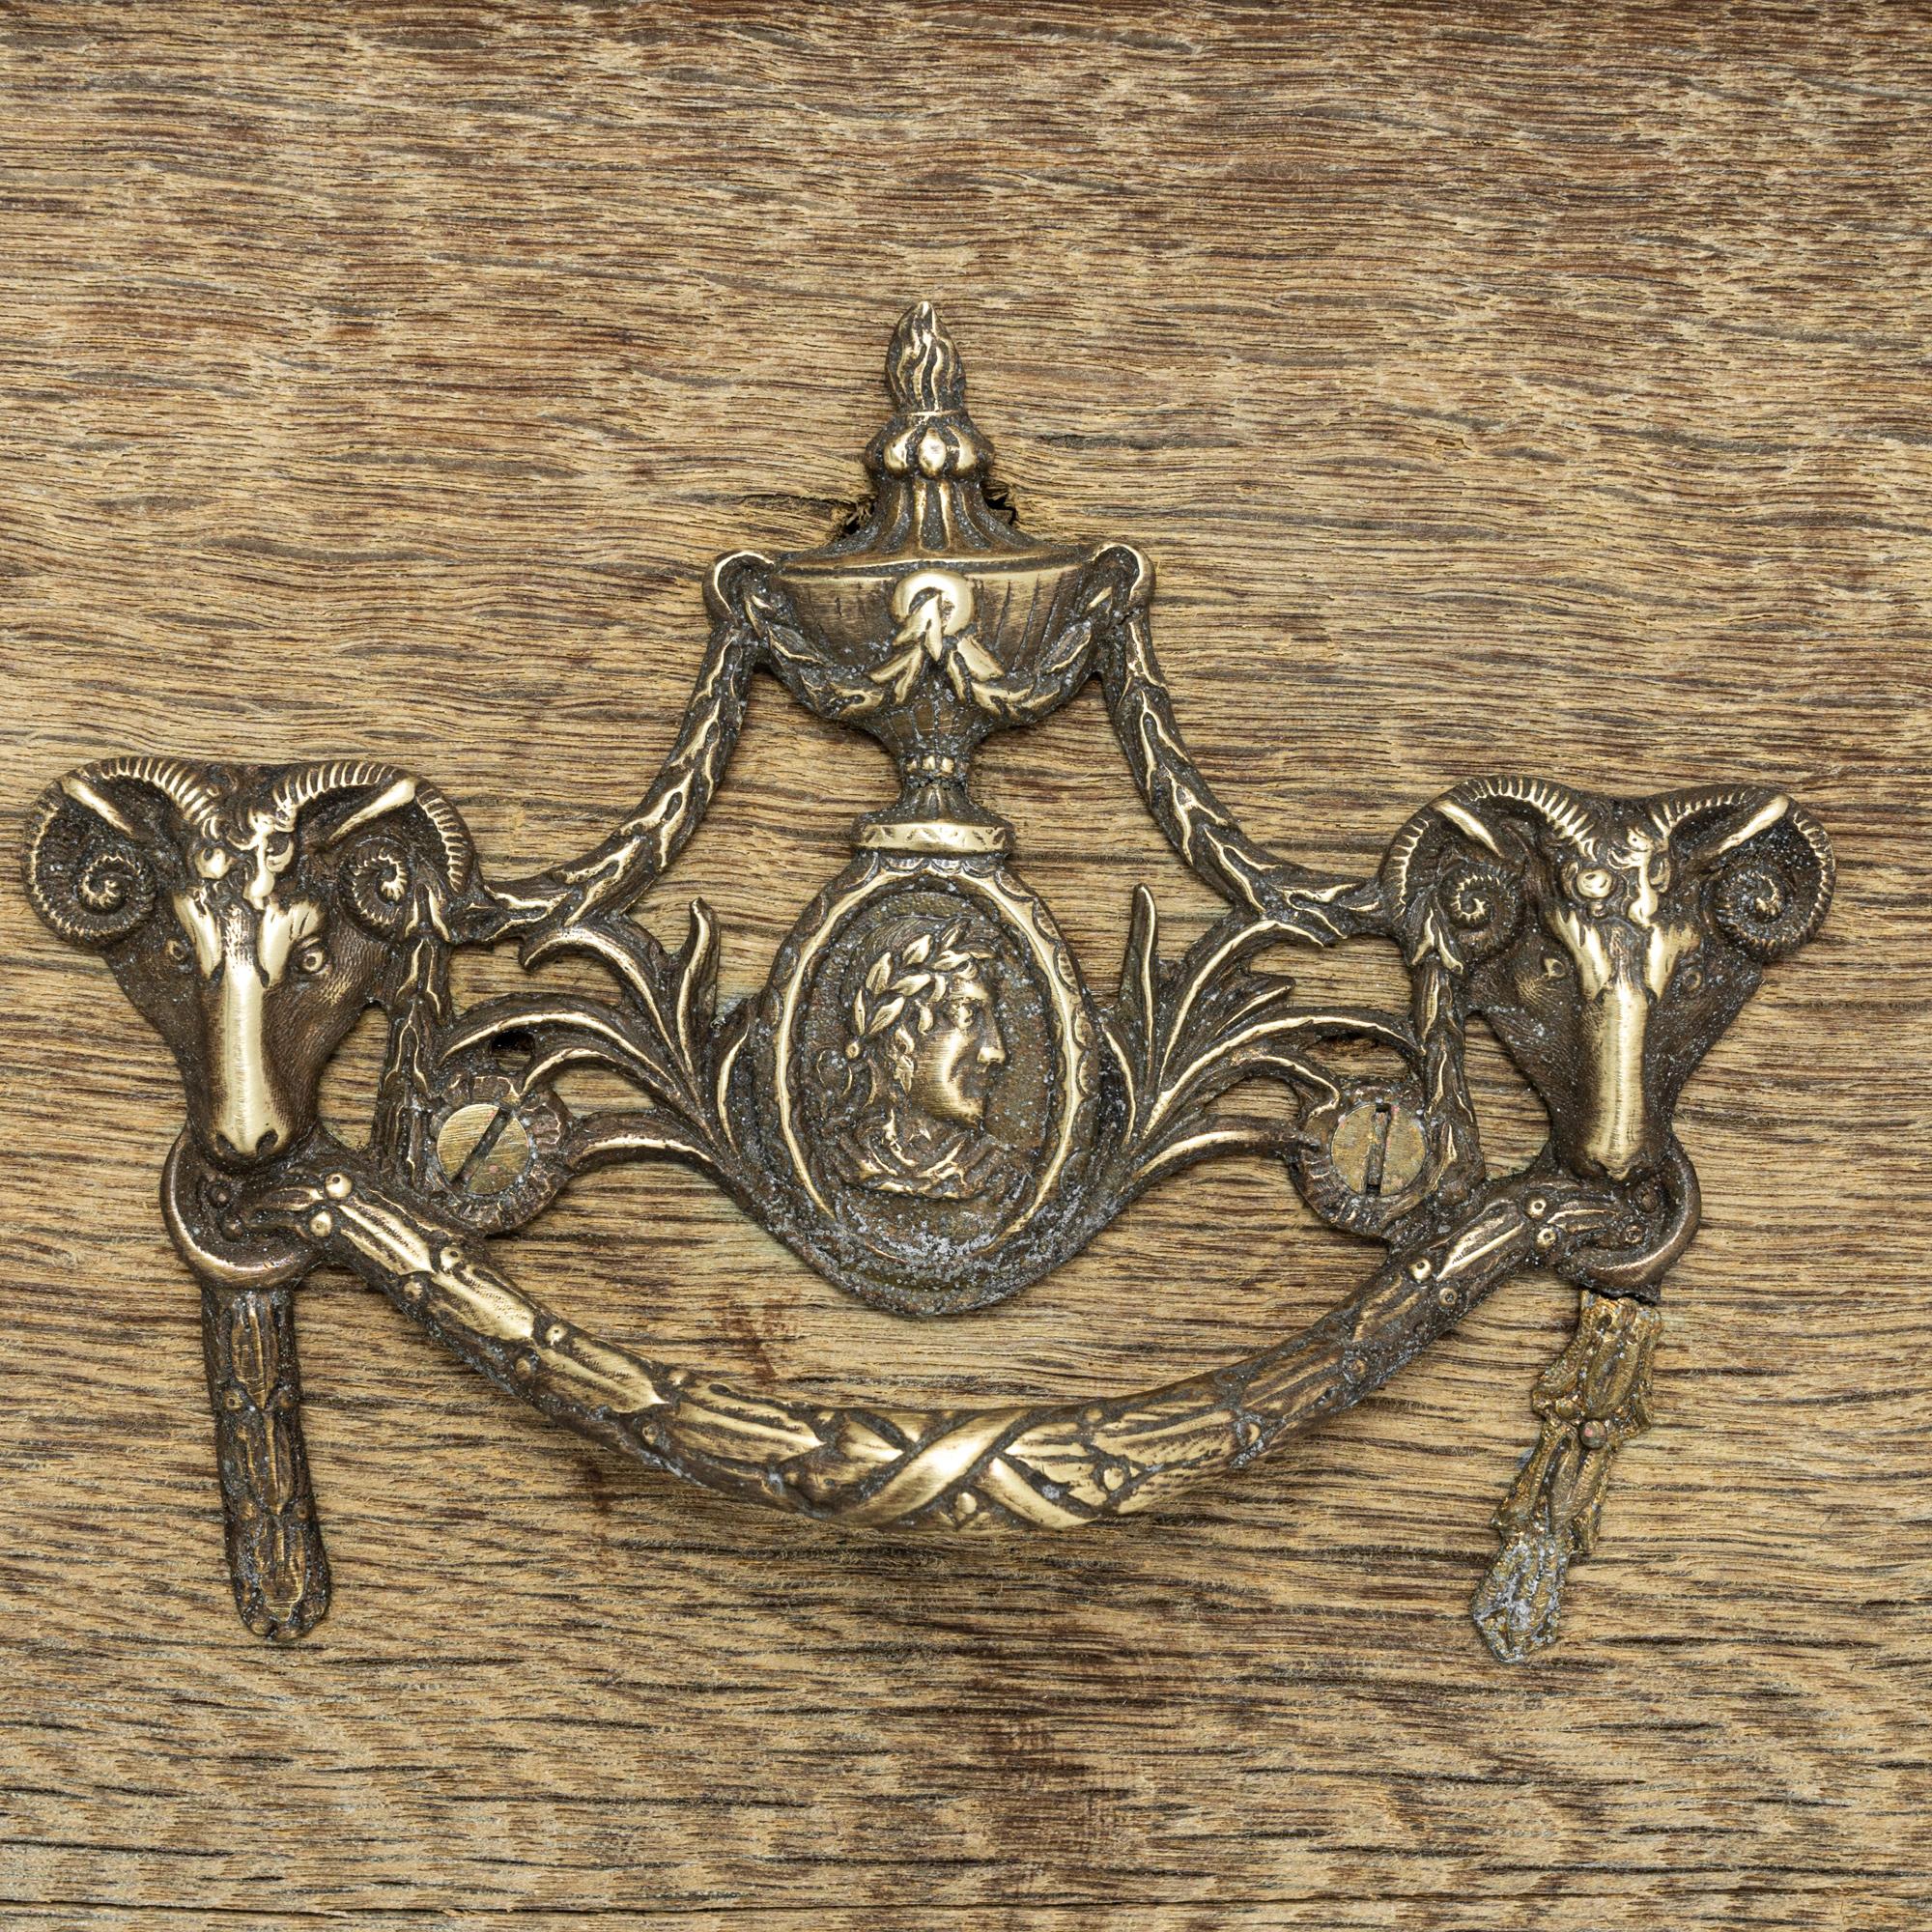 19th Century 1800s Dutch Bleached Oak Cabinet